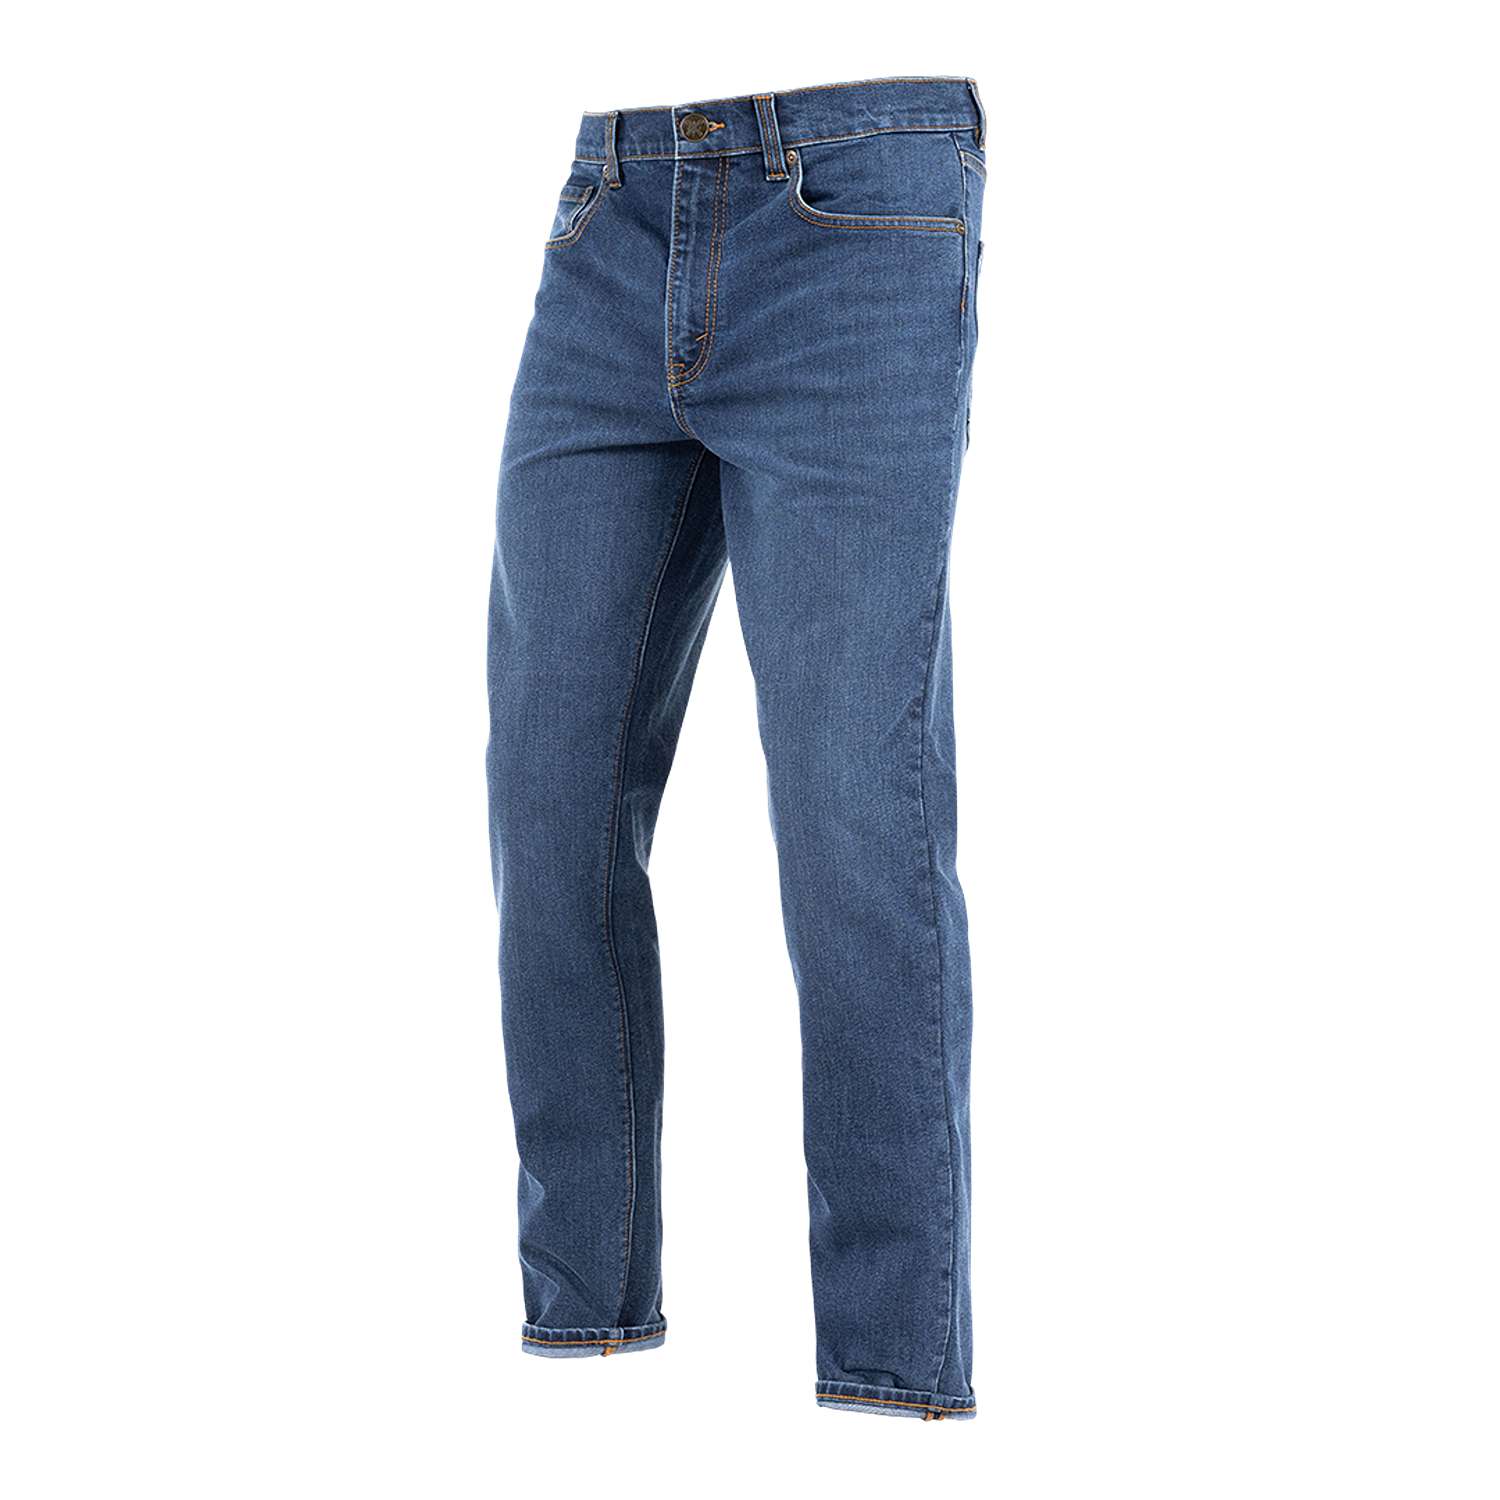 Image of EU John Doe Classic Tapered Jeans Indigo Taille W31/L32